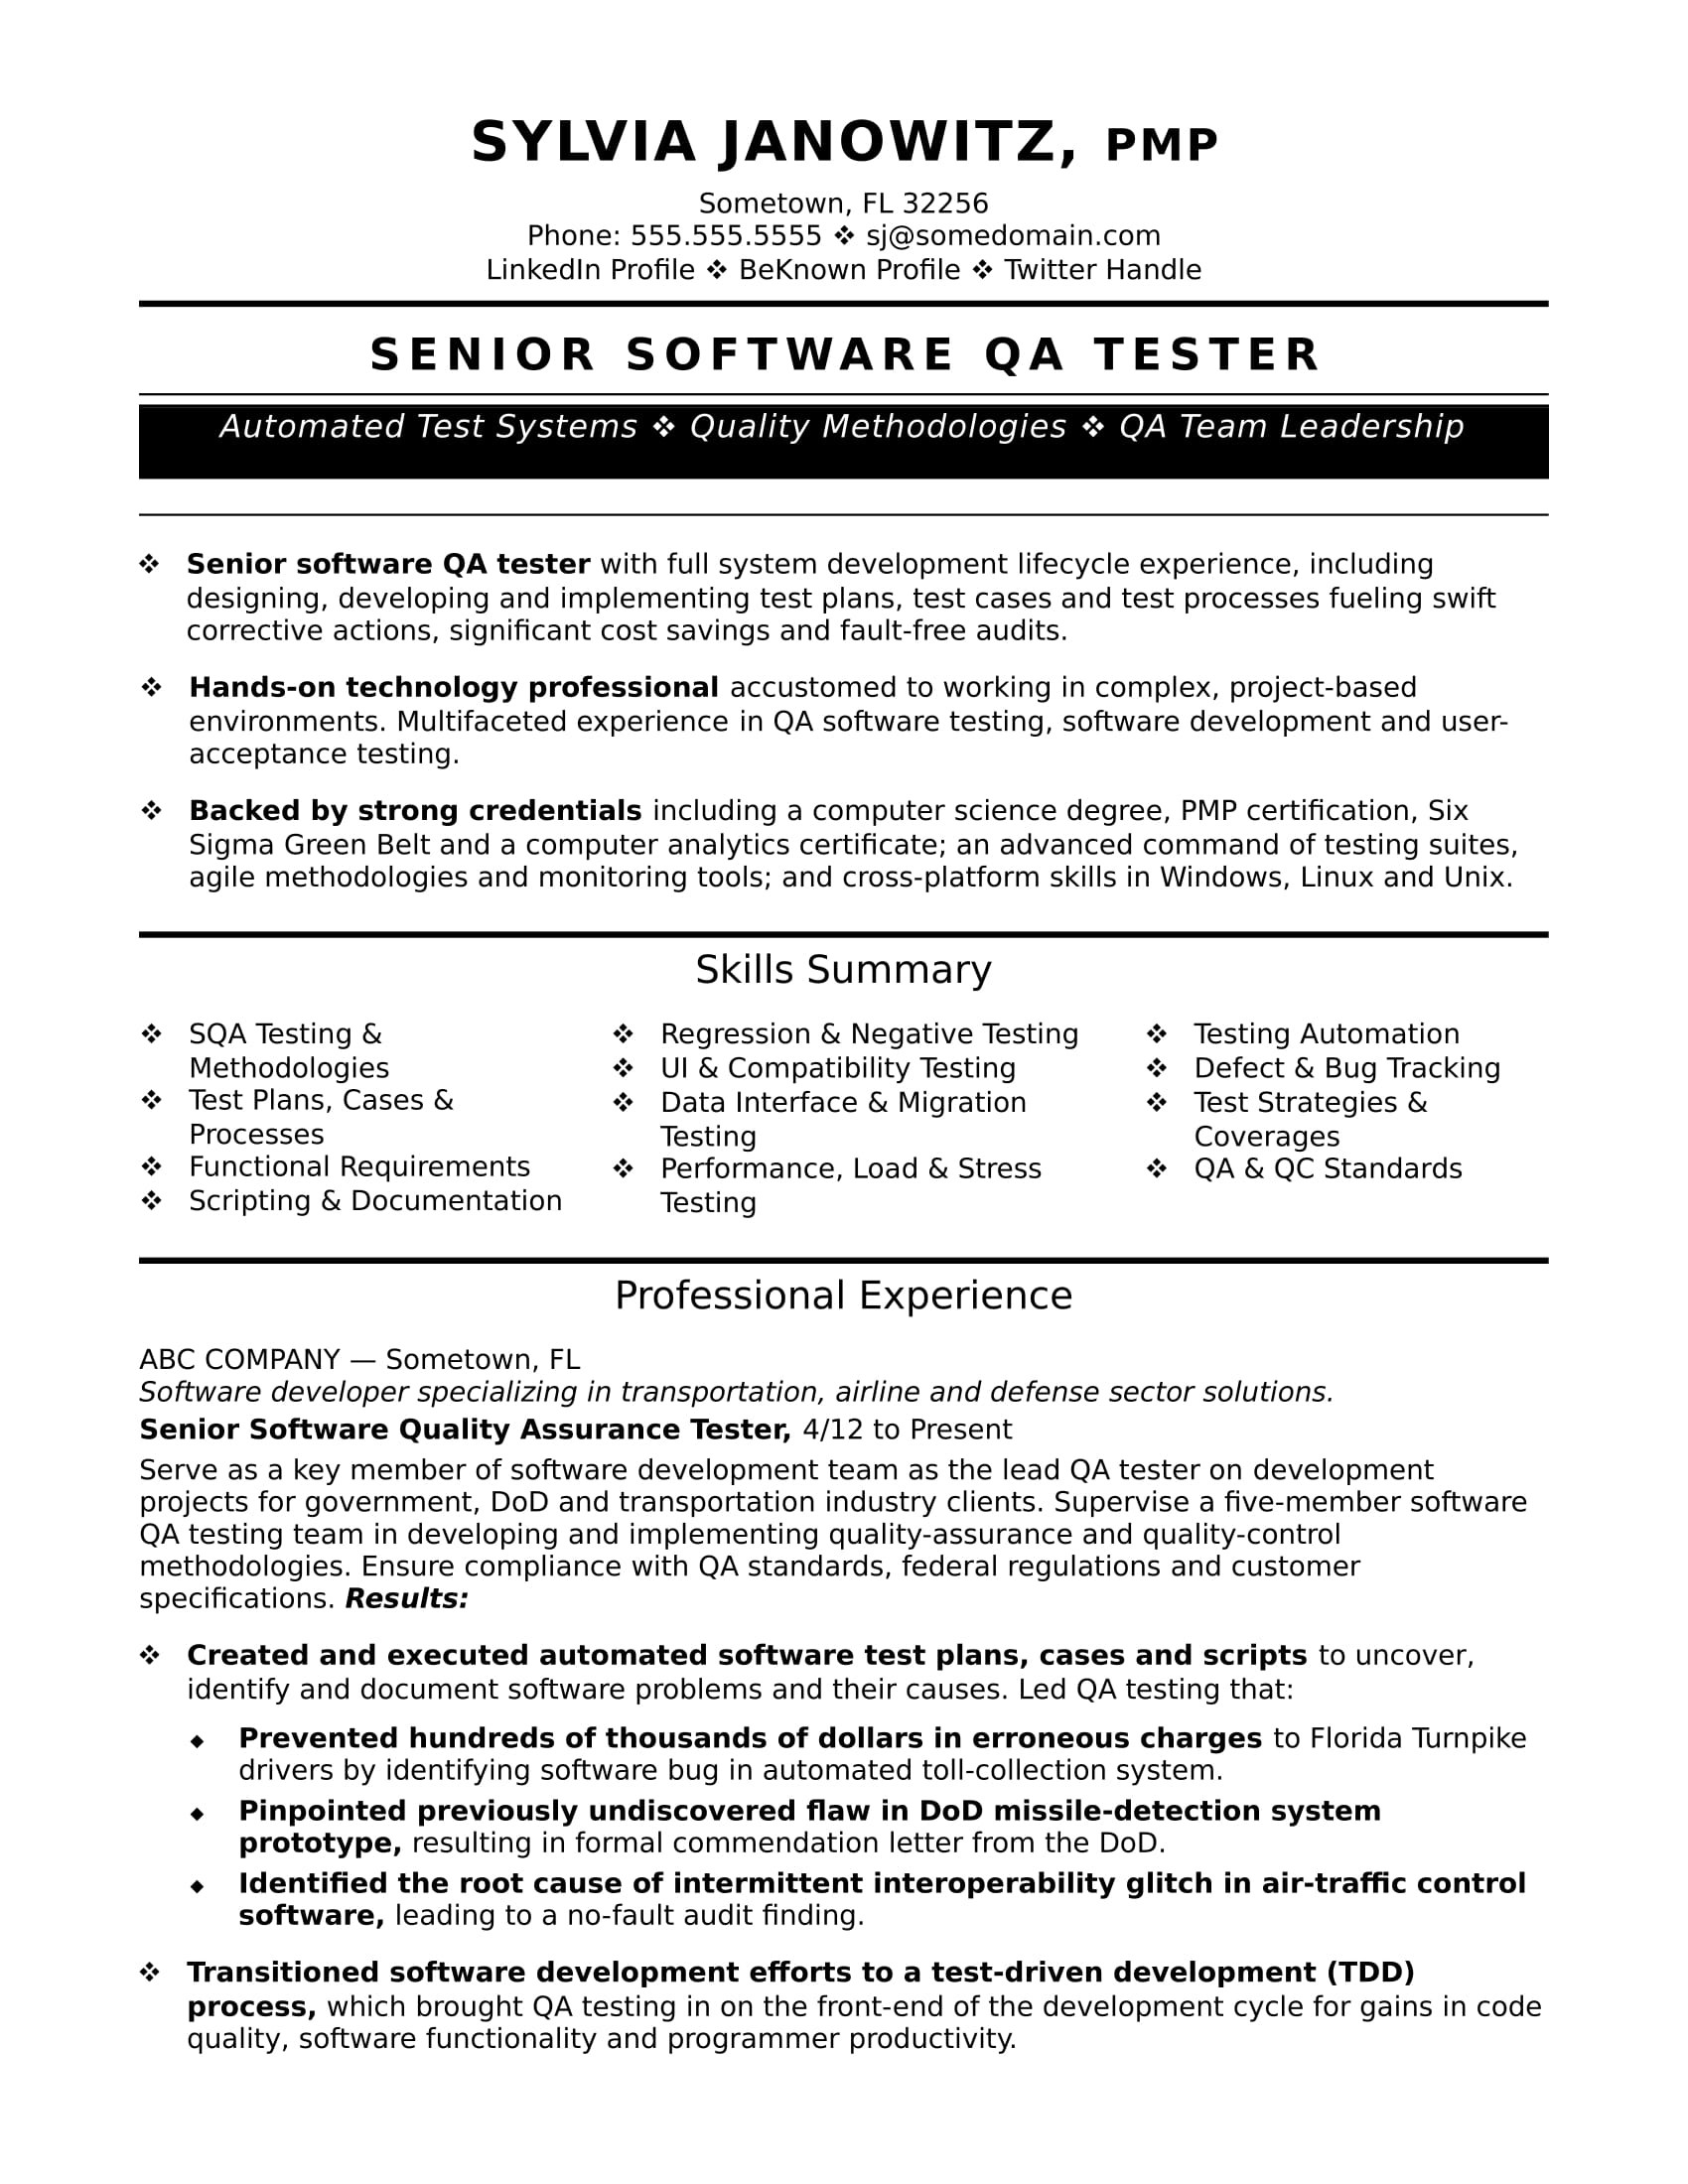 4 Years Experience Qa Resume Sample Experienced Qa software Tester Resume Sample Monster.com